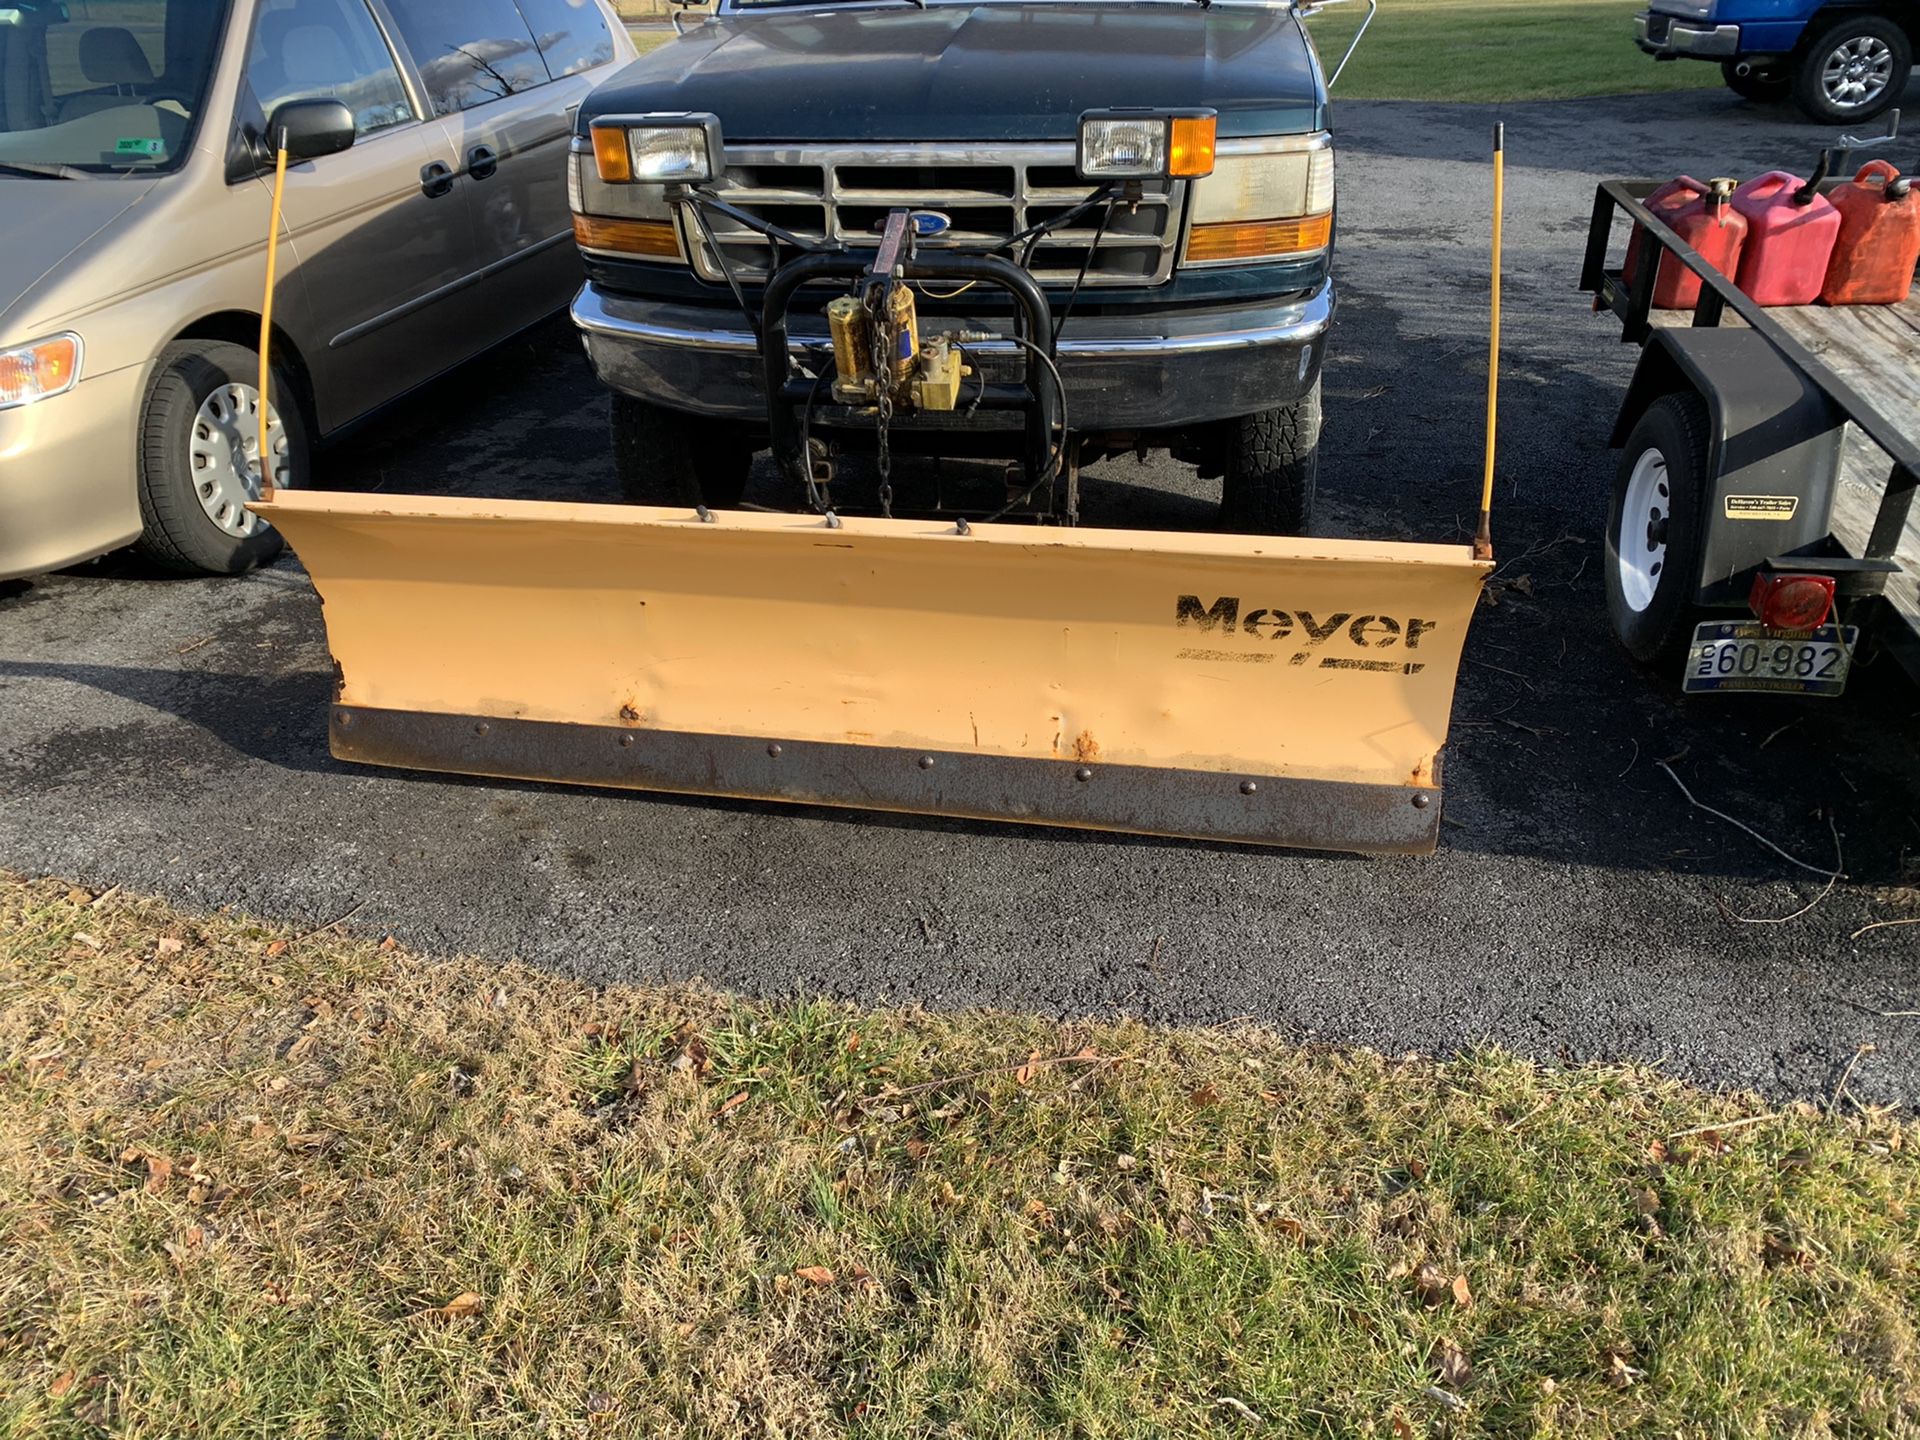 Myers plow